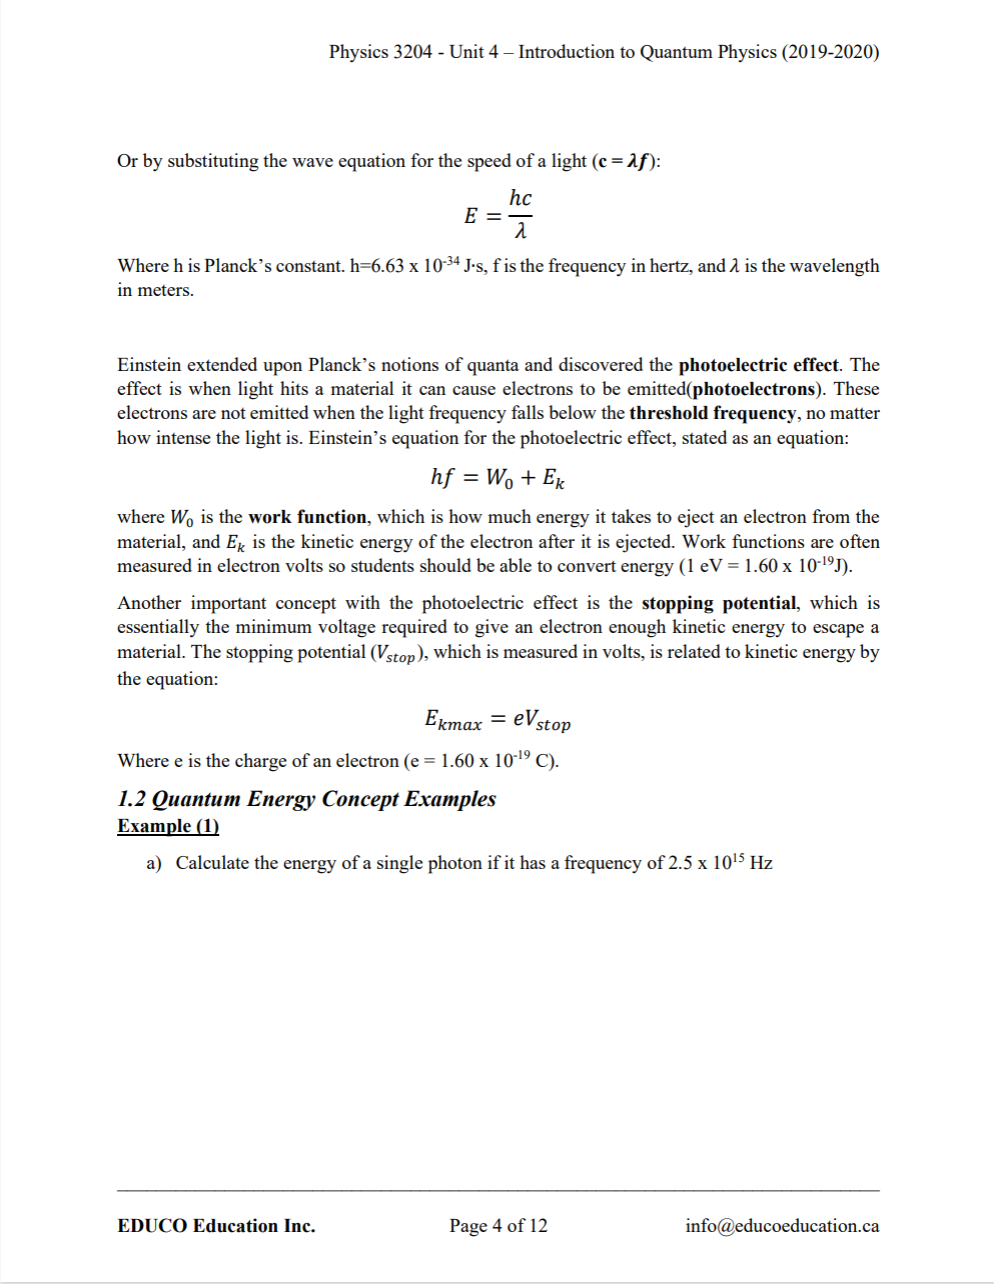 Unit 4: Introduction to Quantum Physics - Physics 3204 (Digital Download)